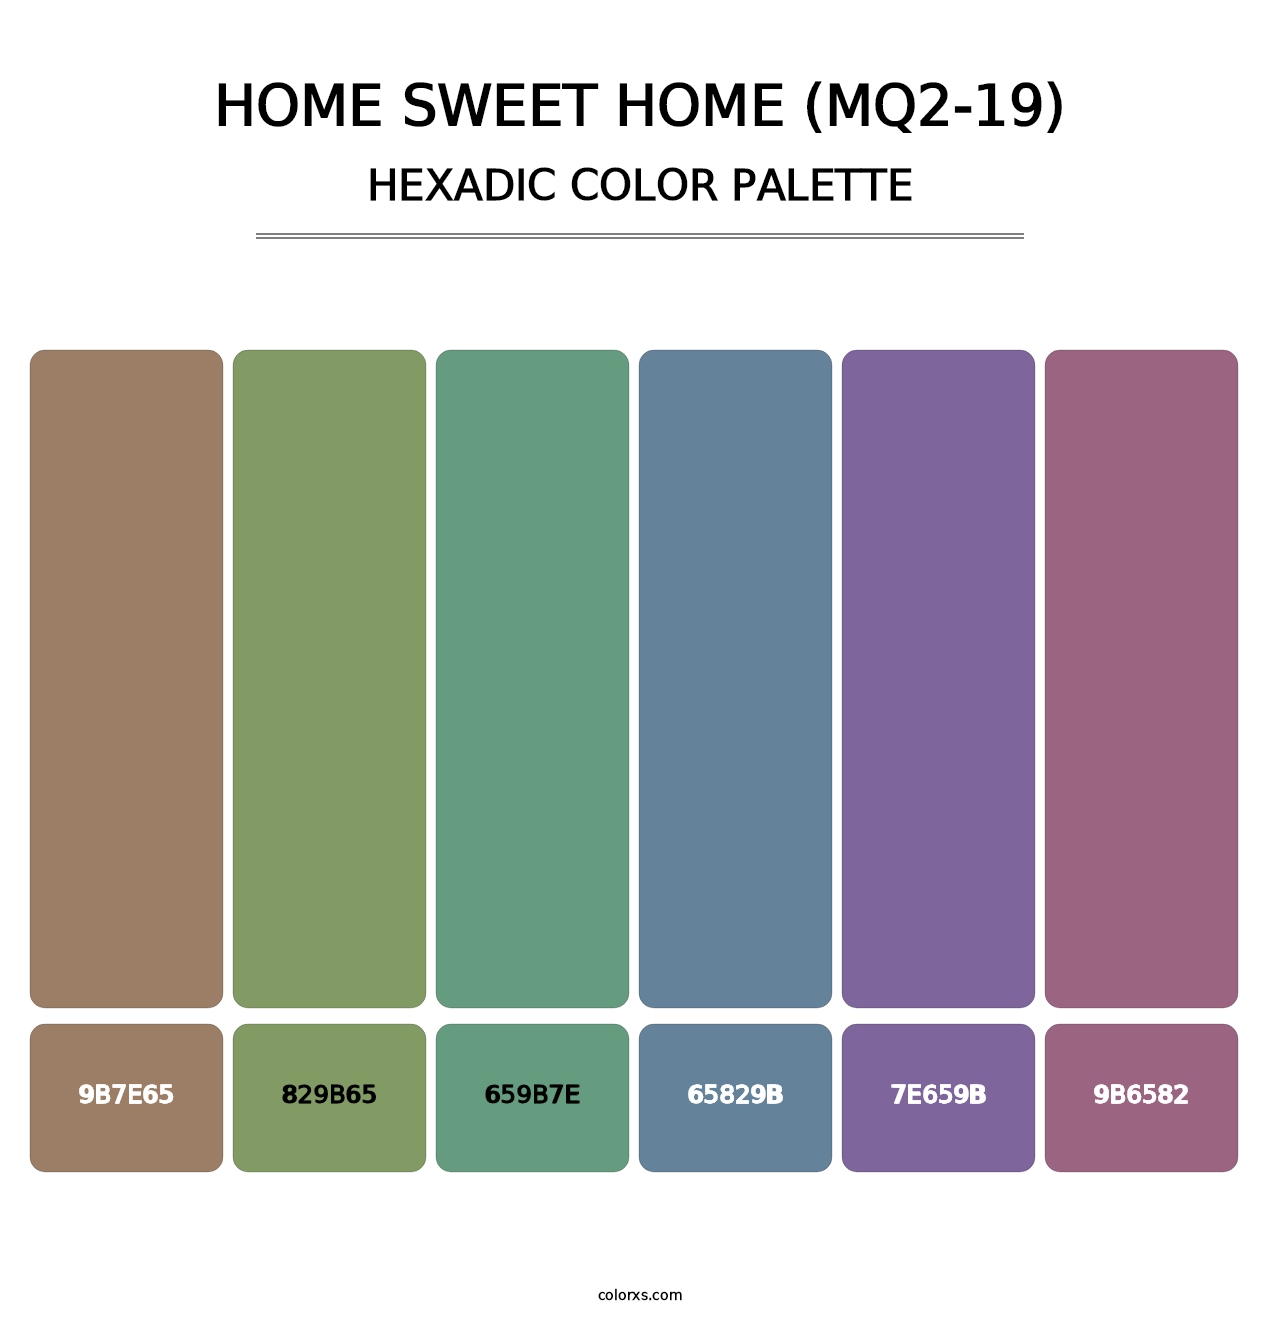 Home Sweet Home (MQ2-19) - Hexadic Color Palette